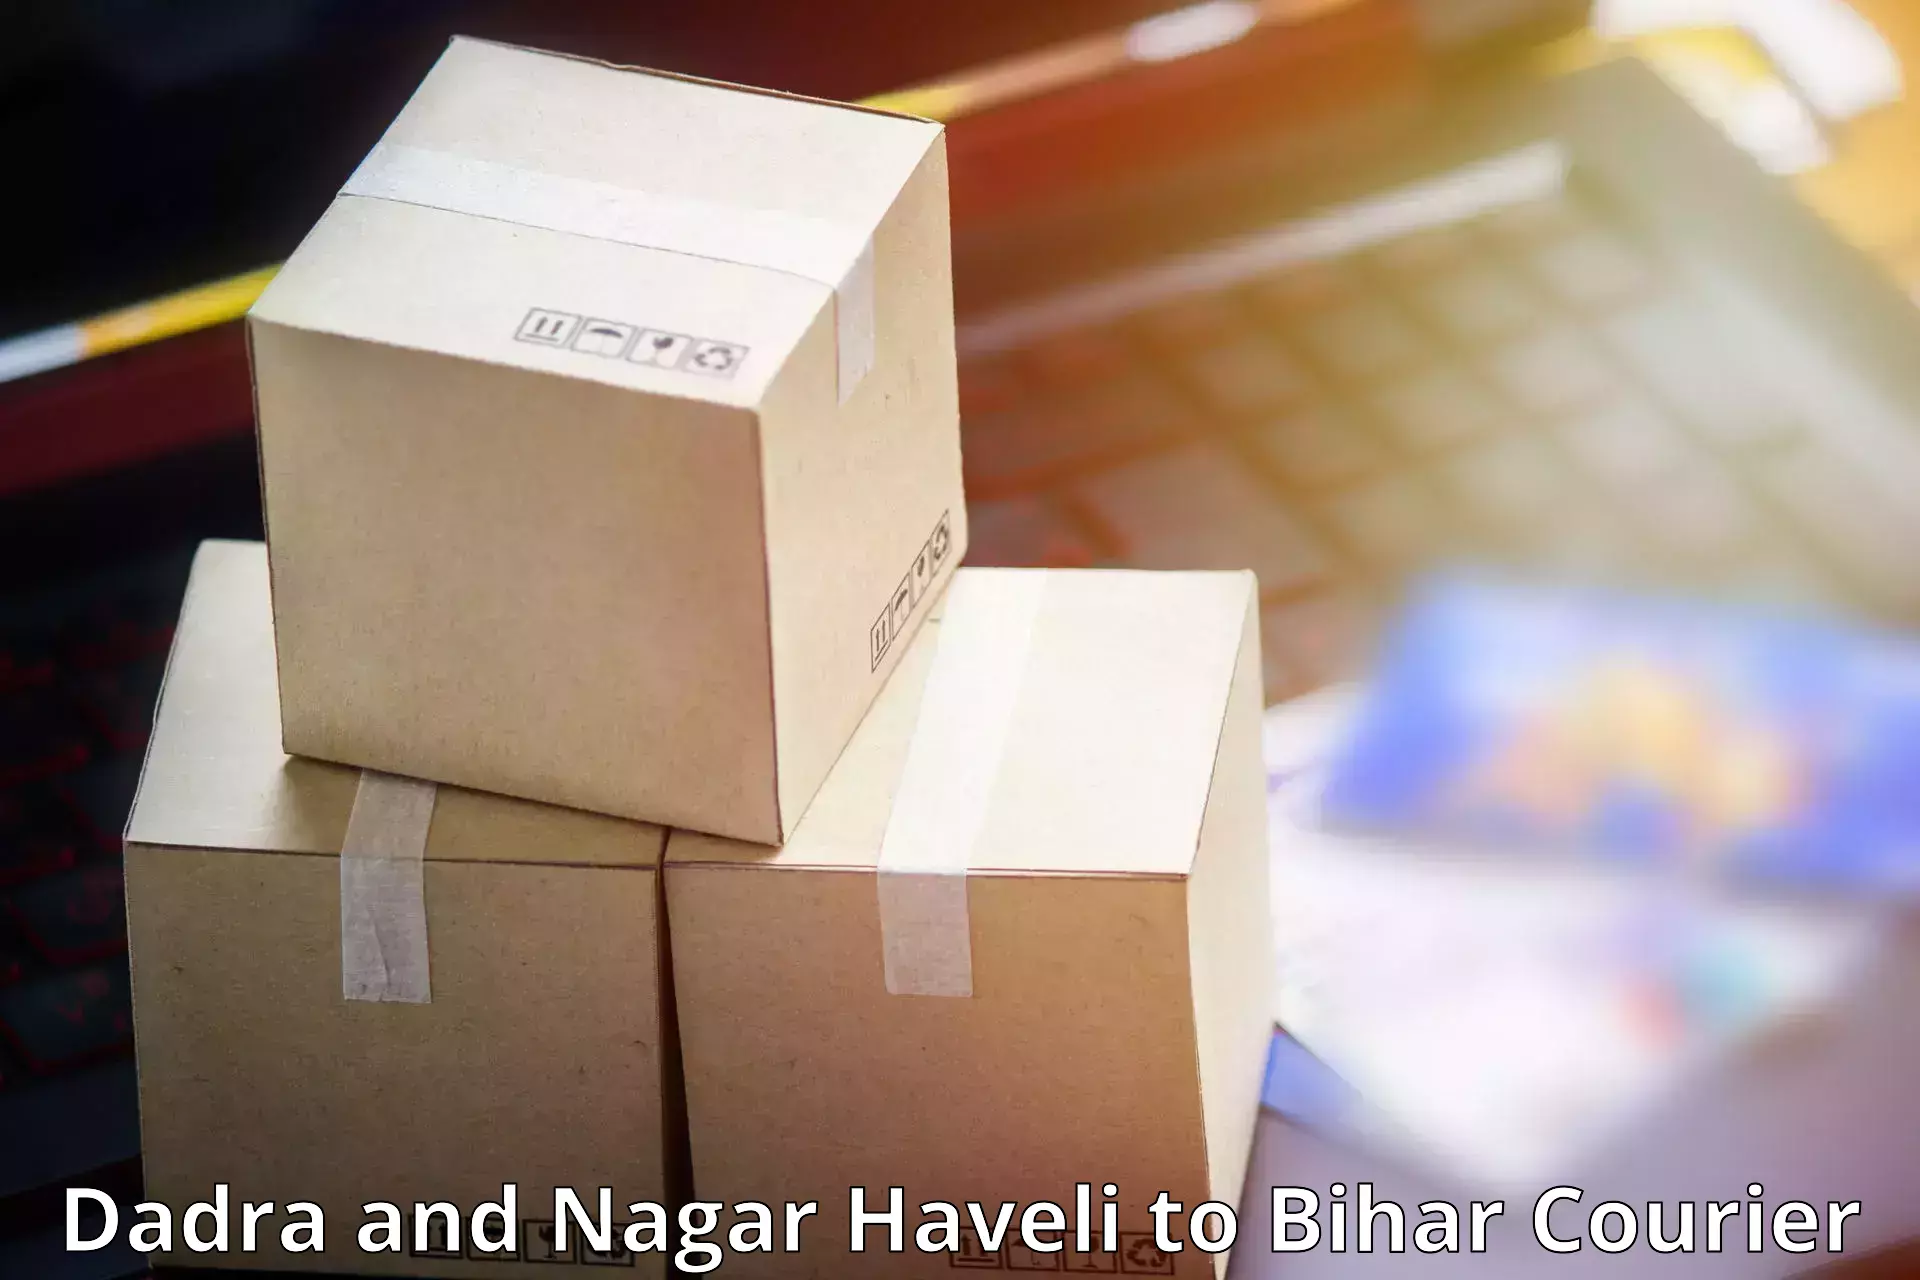 Advanced shipping technology Dadra and Nagar Haveli to Mashrakh